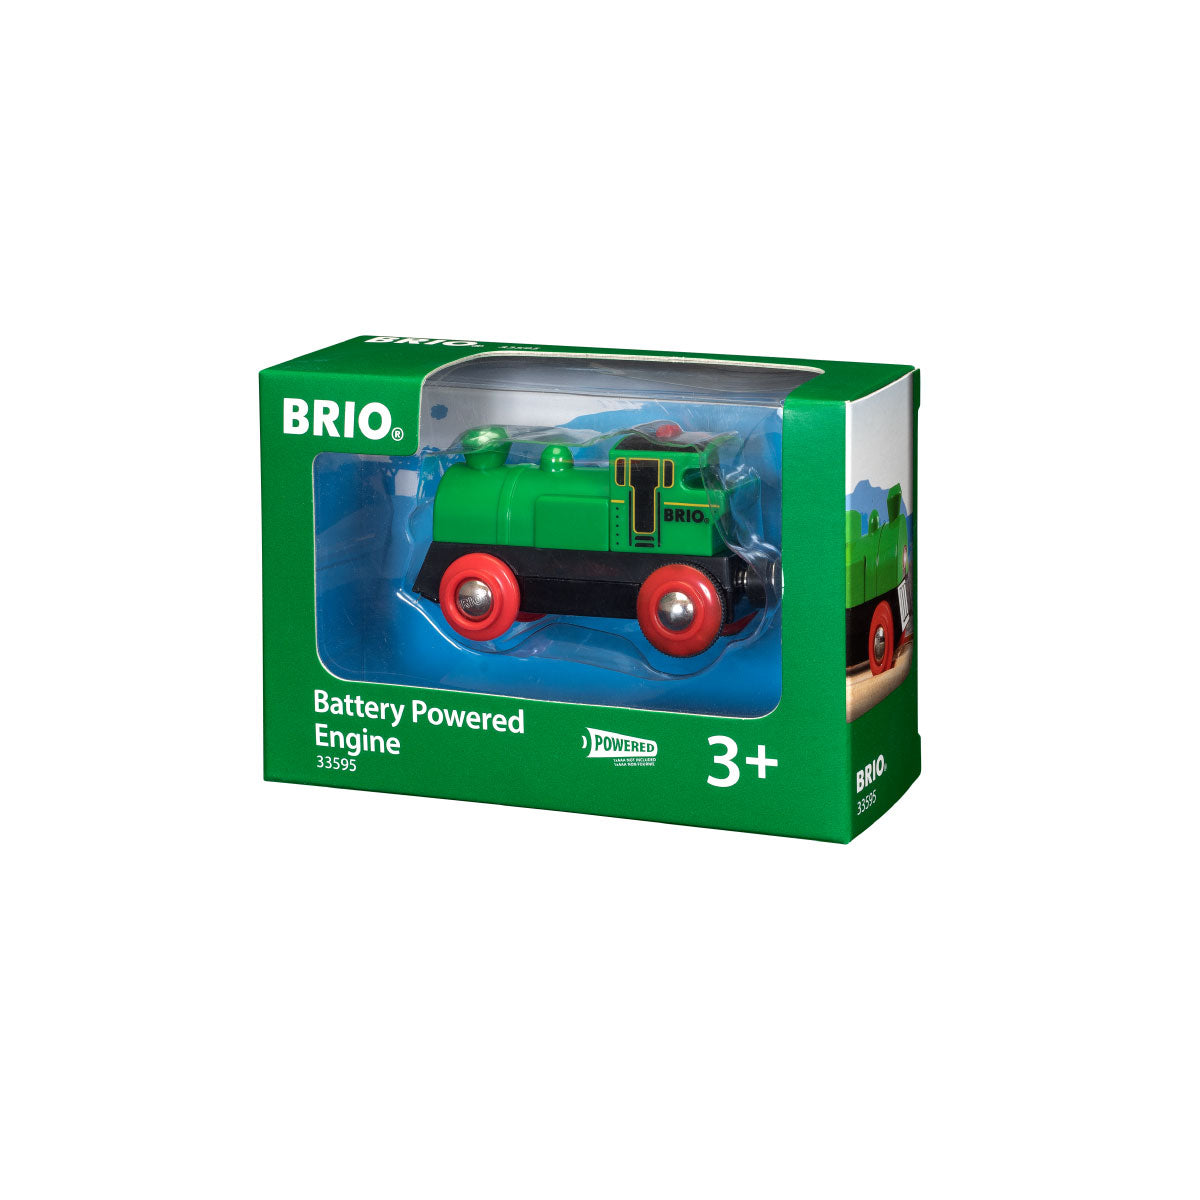 Brio Battery Powered Engine - Green